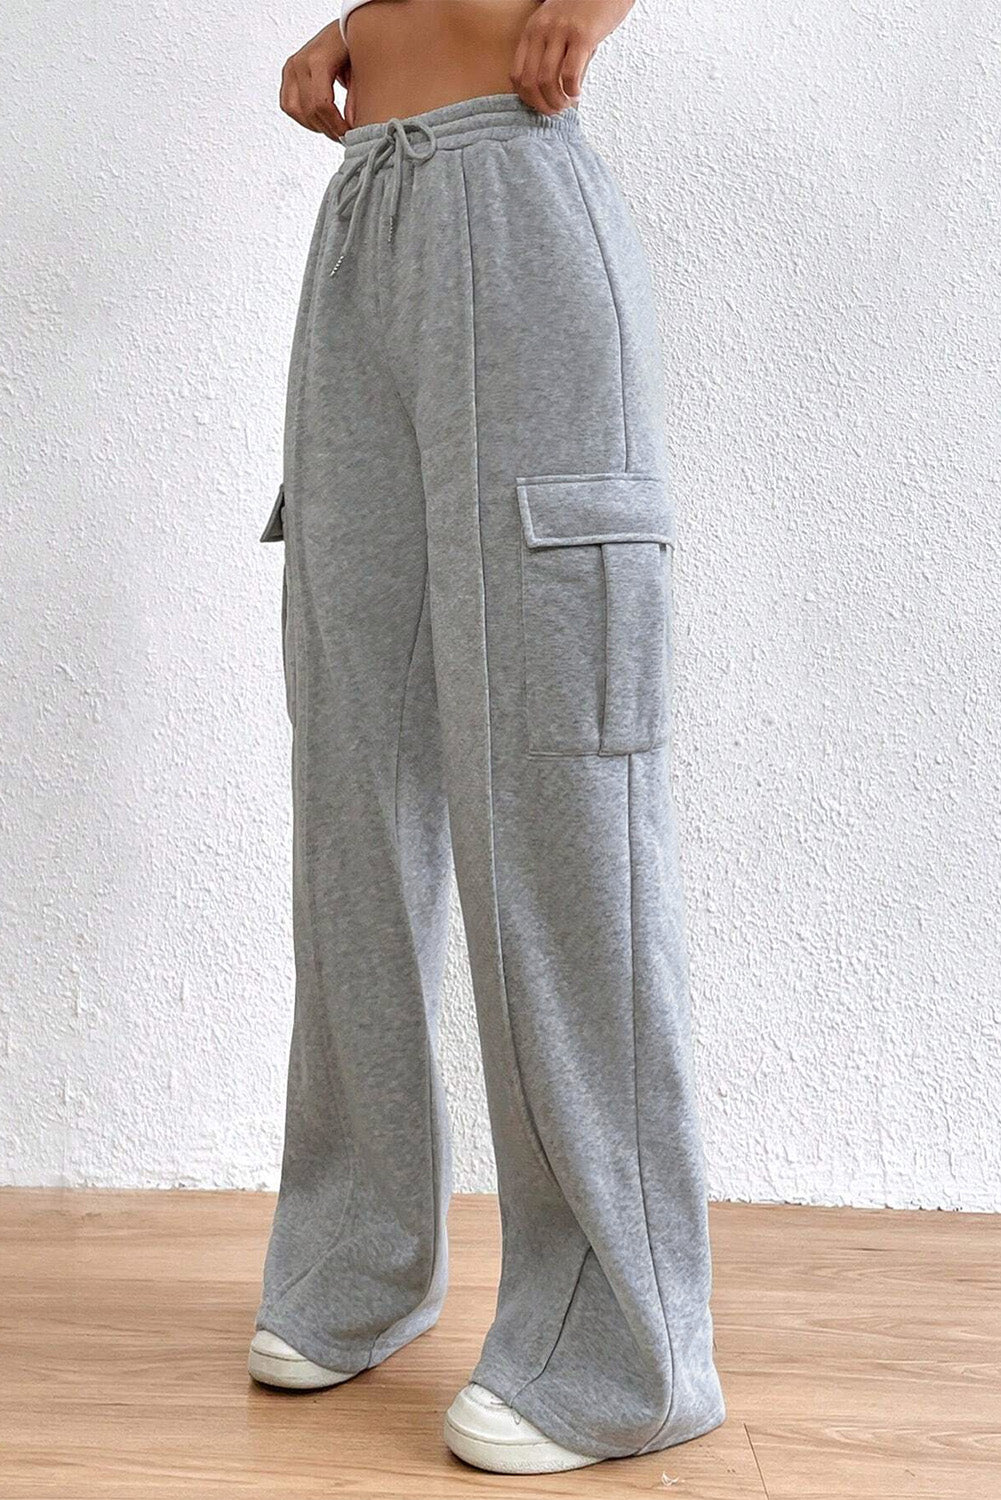 TEEK - Light Gray Drawstring High Waist Pocketed Pants PANTS TEEK Trend   